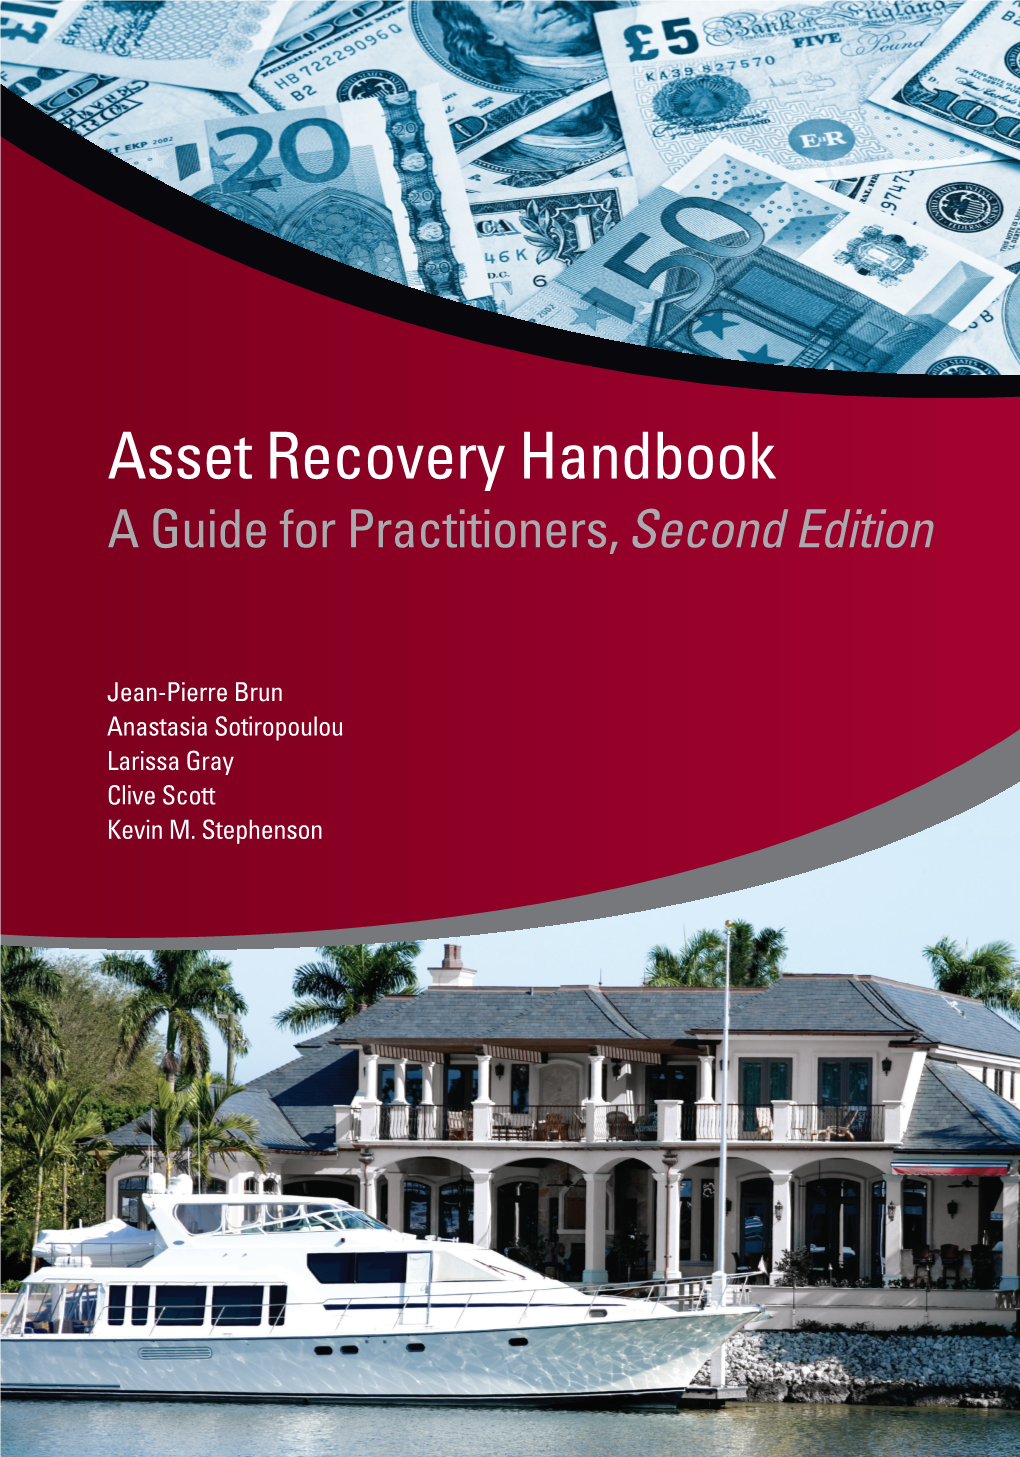 Asset Recovery Handbook, Second Edition